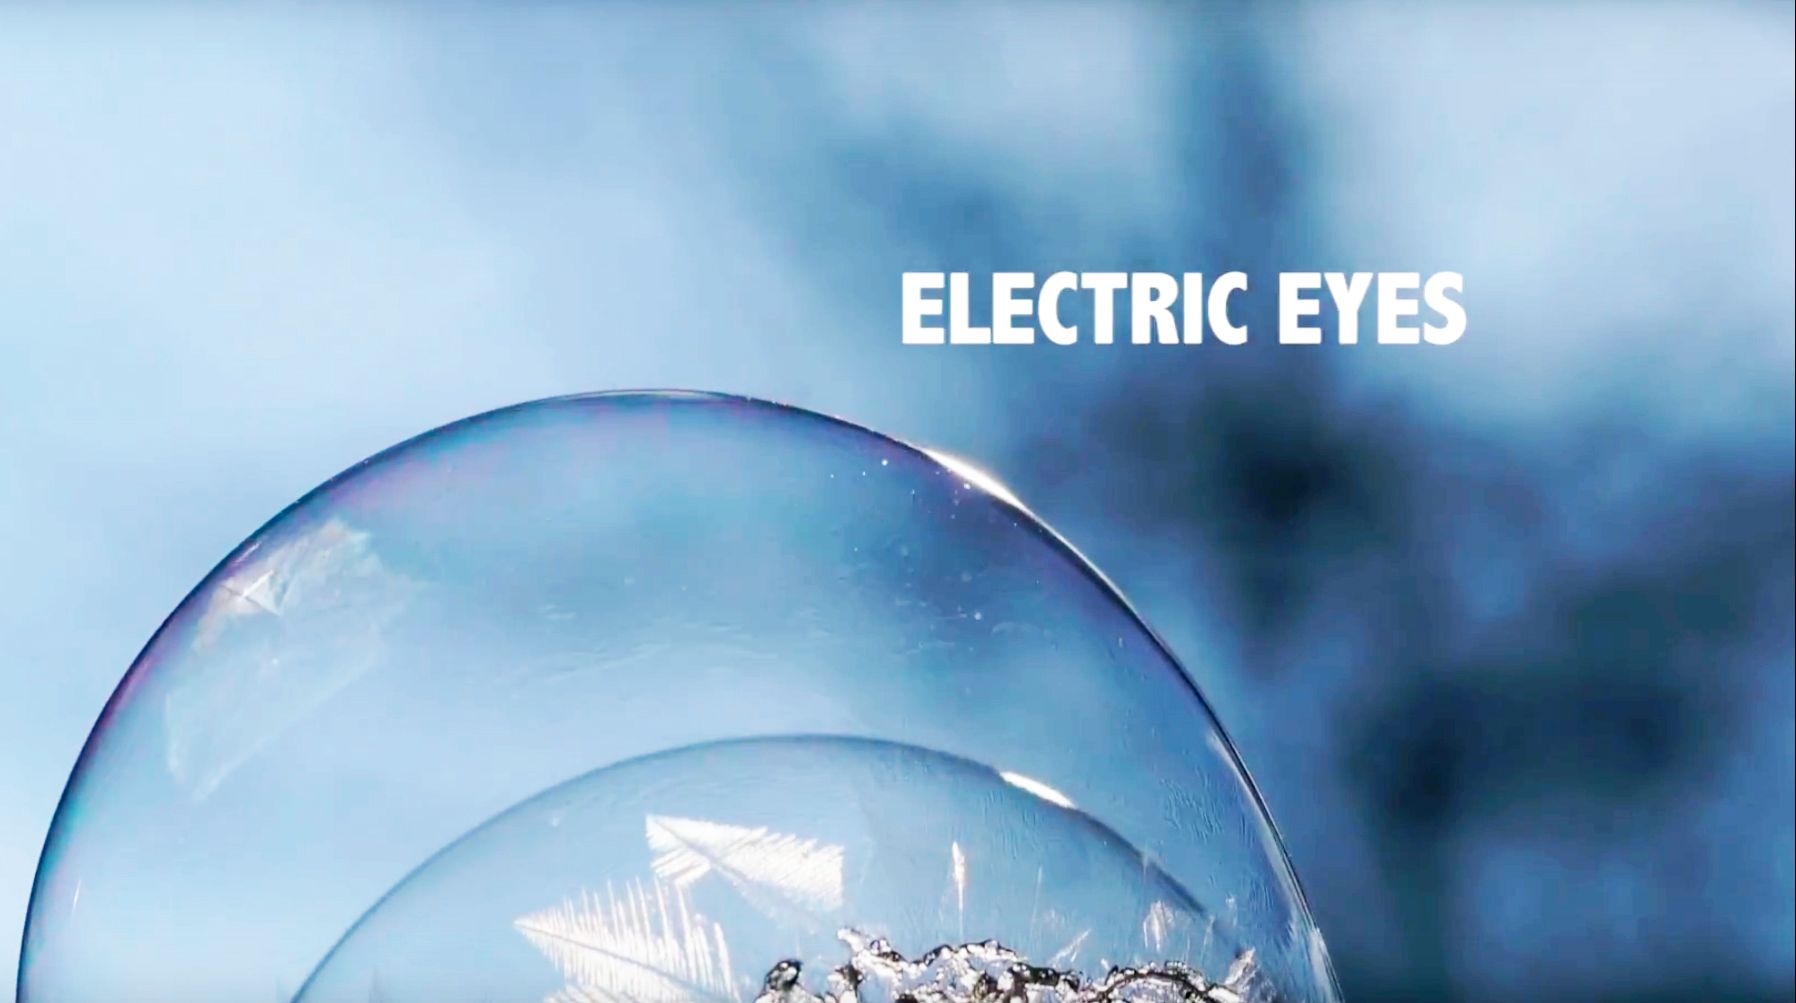 electric eyes image.jpg